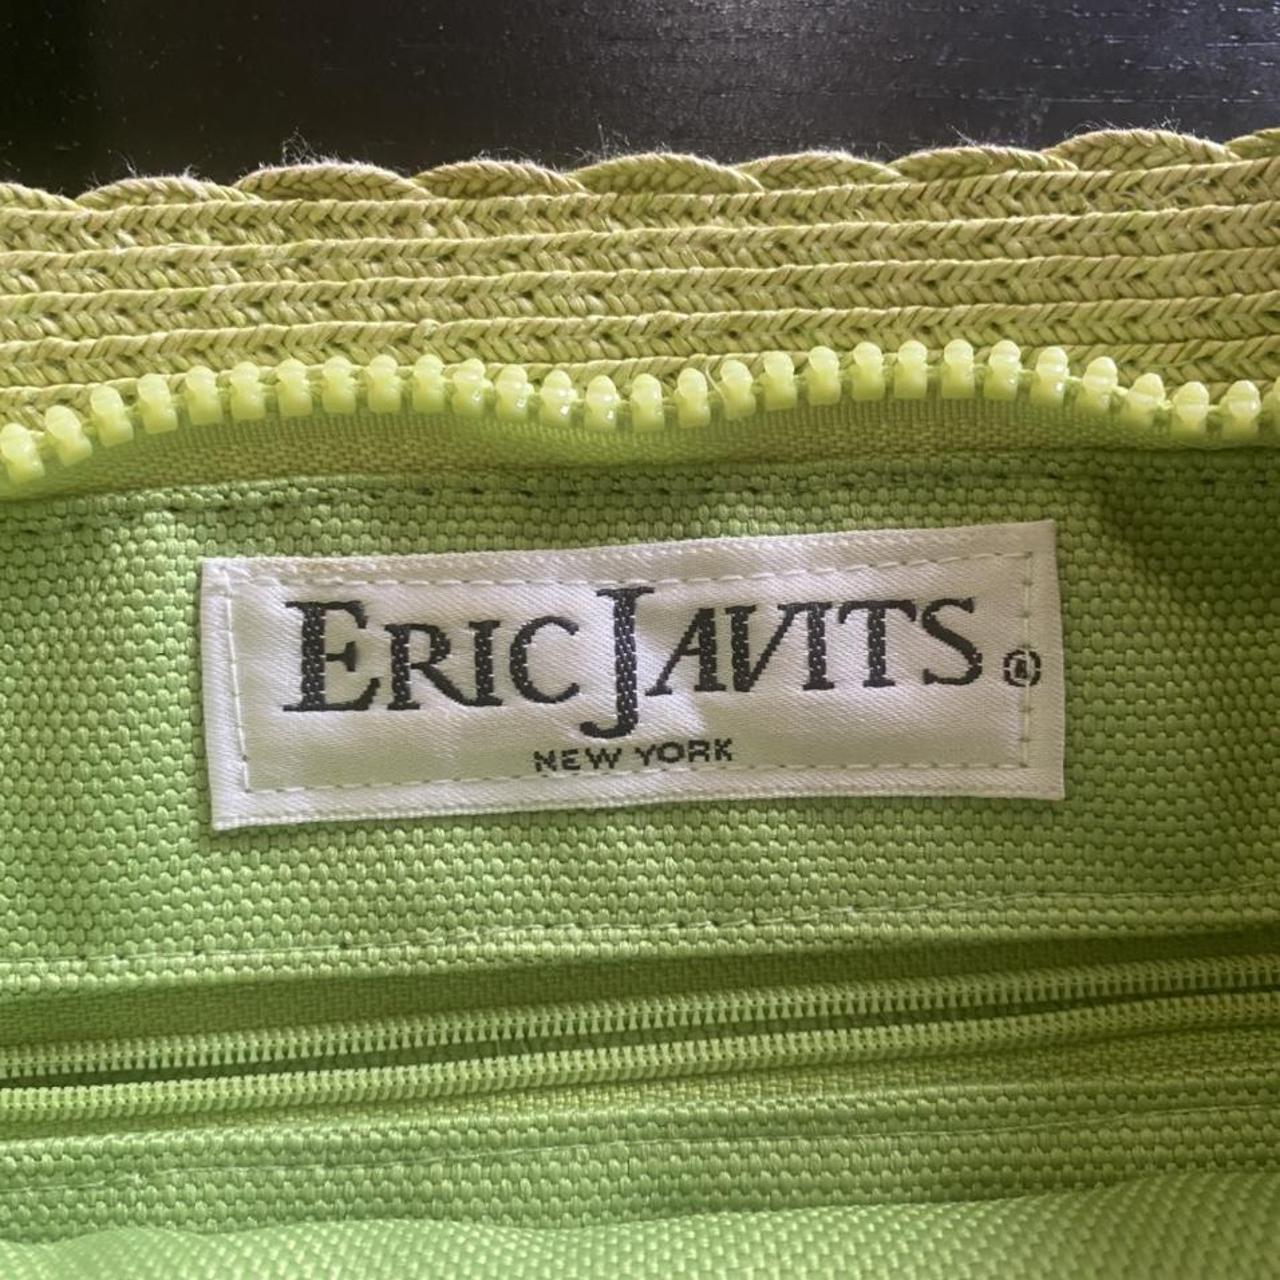 Eric Javits Women's Green Bag (4)